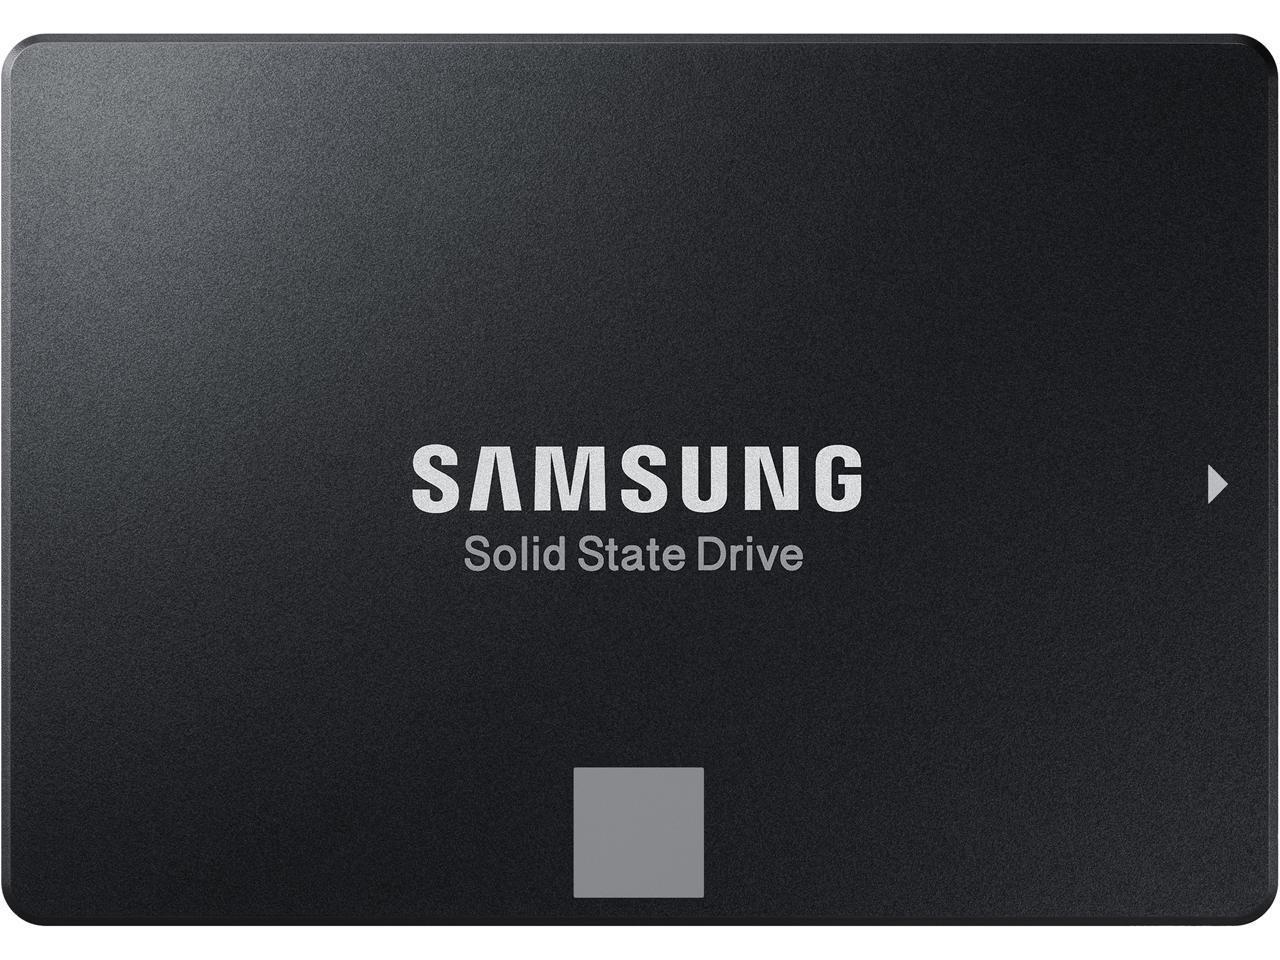 Samsung SSD 860 EVO Series 500GB 500G SATA III 2.5" 3D NAND Internal MZ-76E500B 